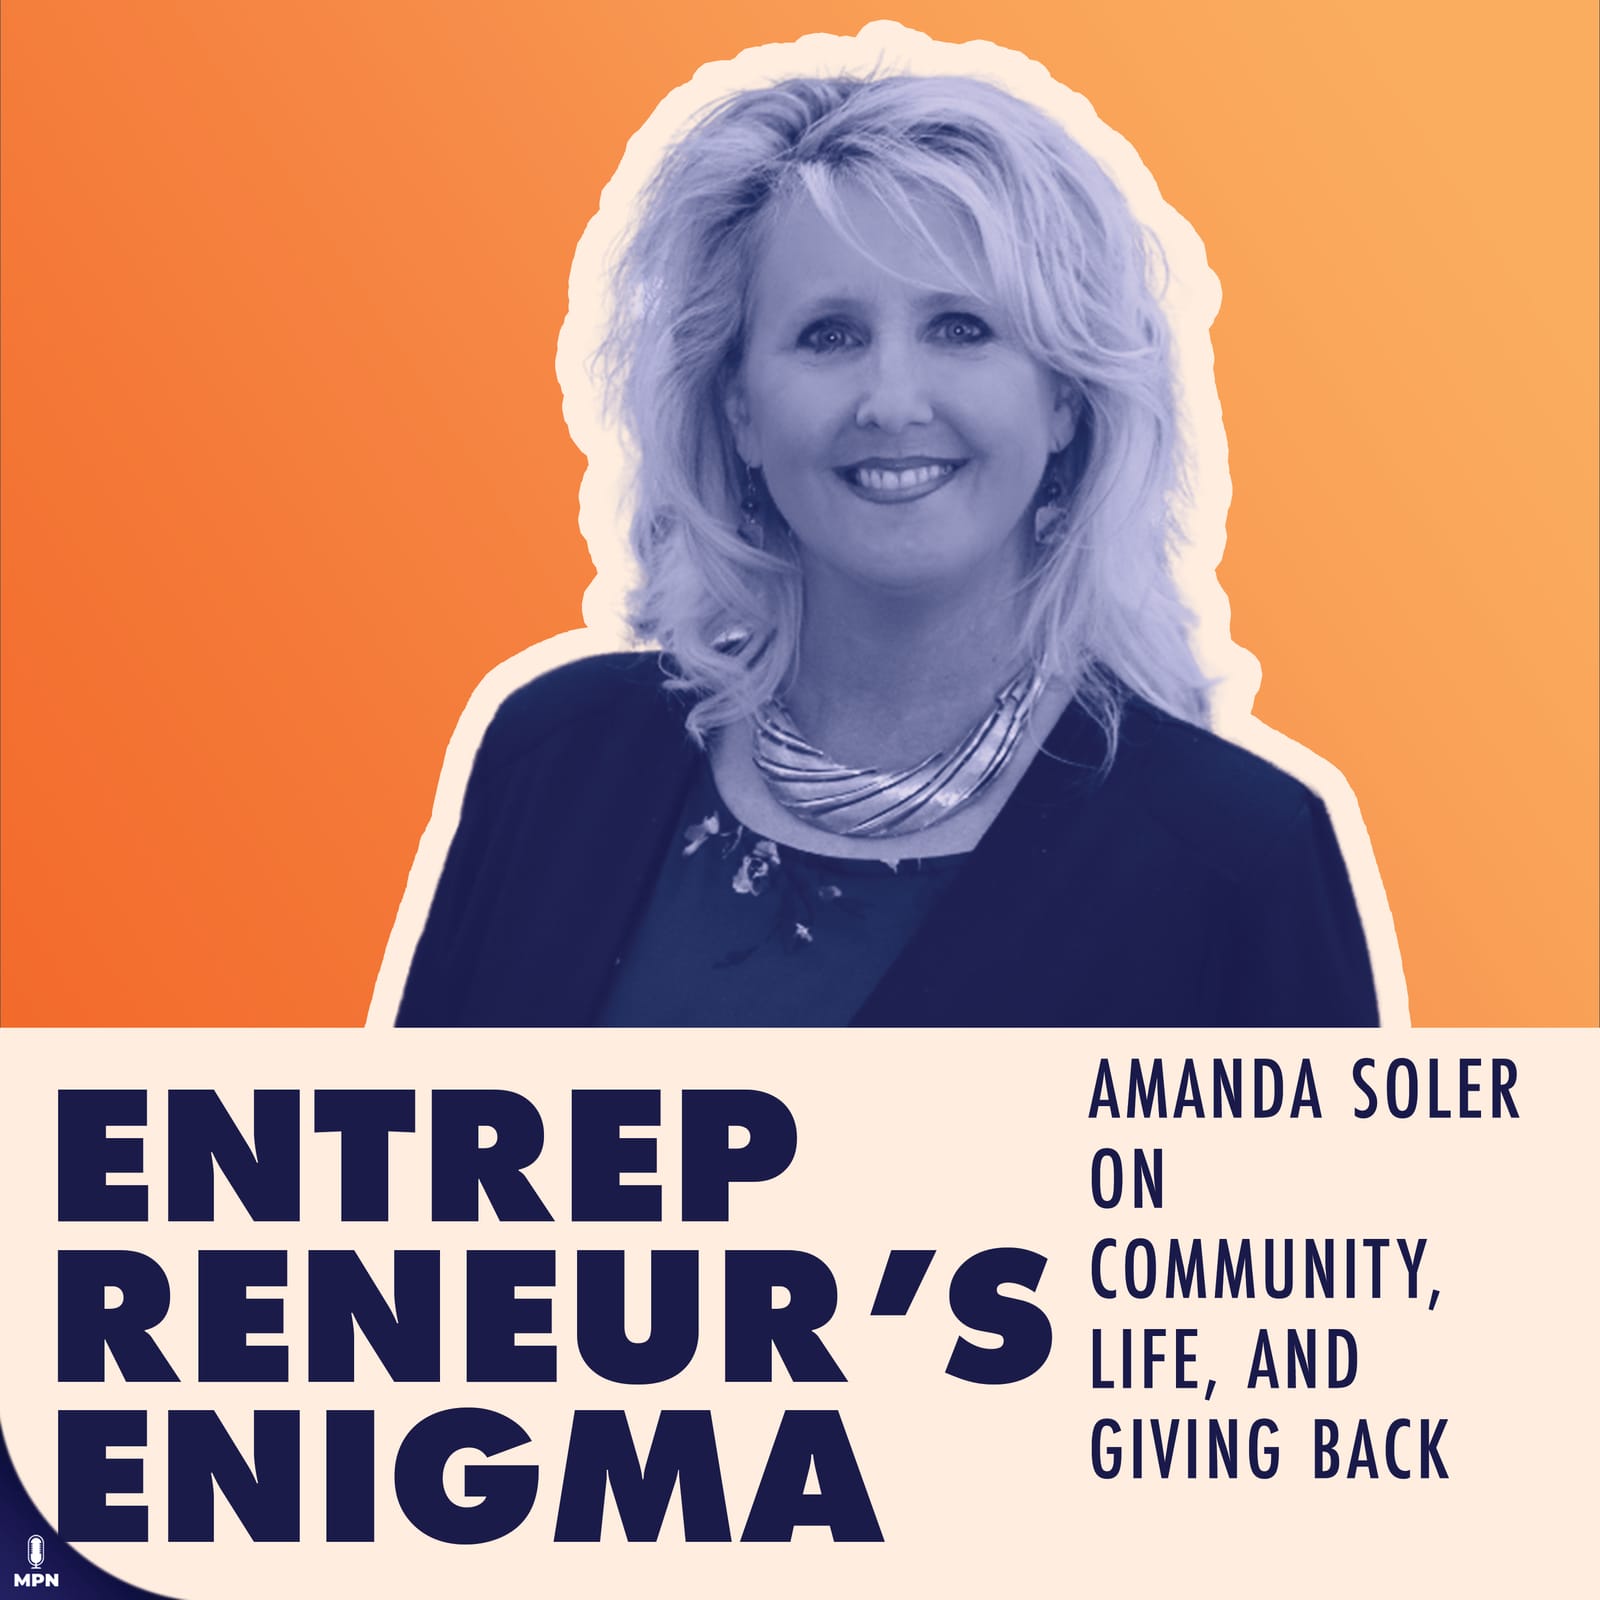 Entrepreneur's Enigma album art with Amanda Soler's picture on orange in blue tint. says Amanda Soler on Community, Life, And Giving Back